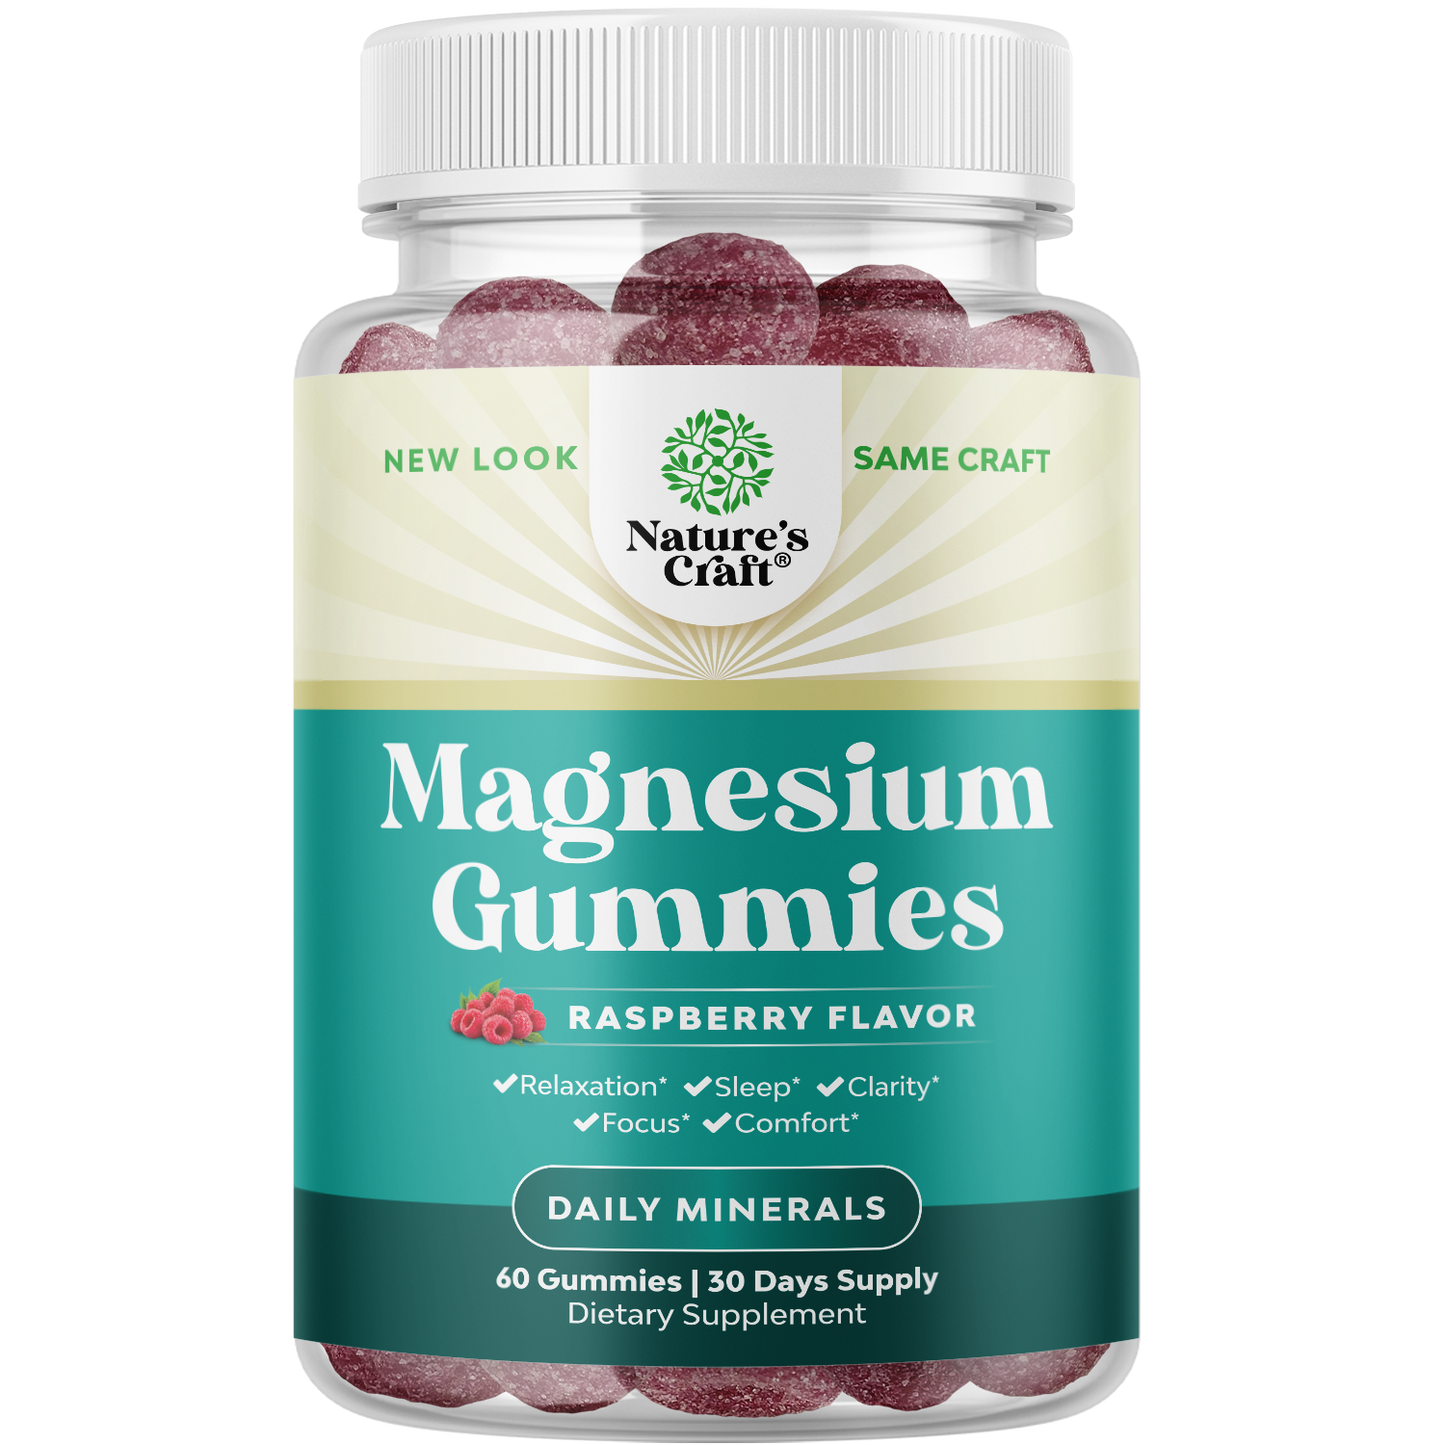 Magnesium Gummies 170mg per serving